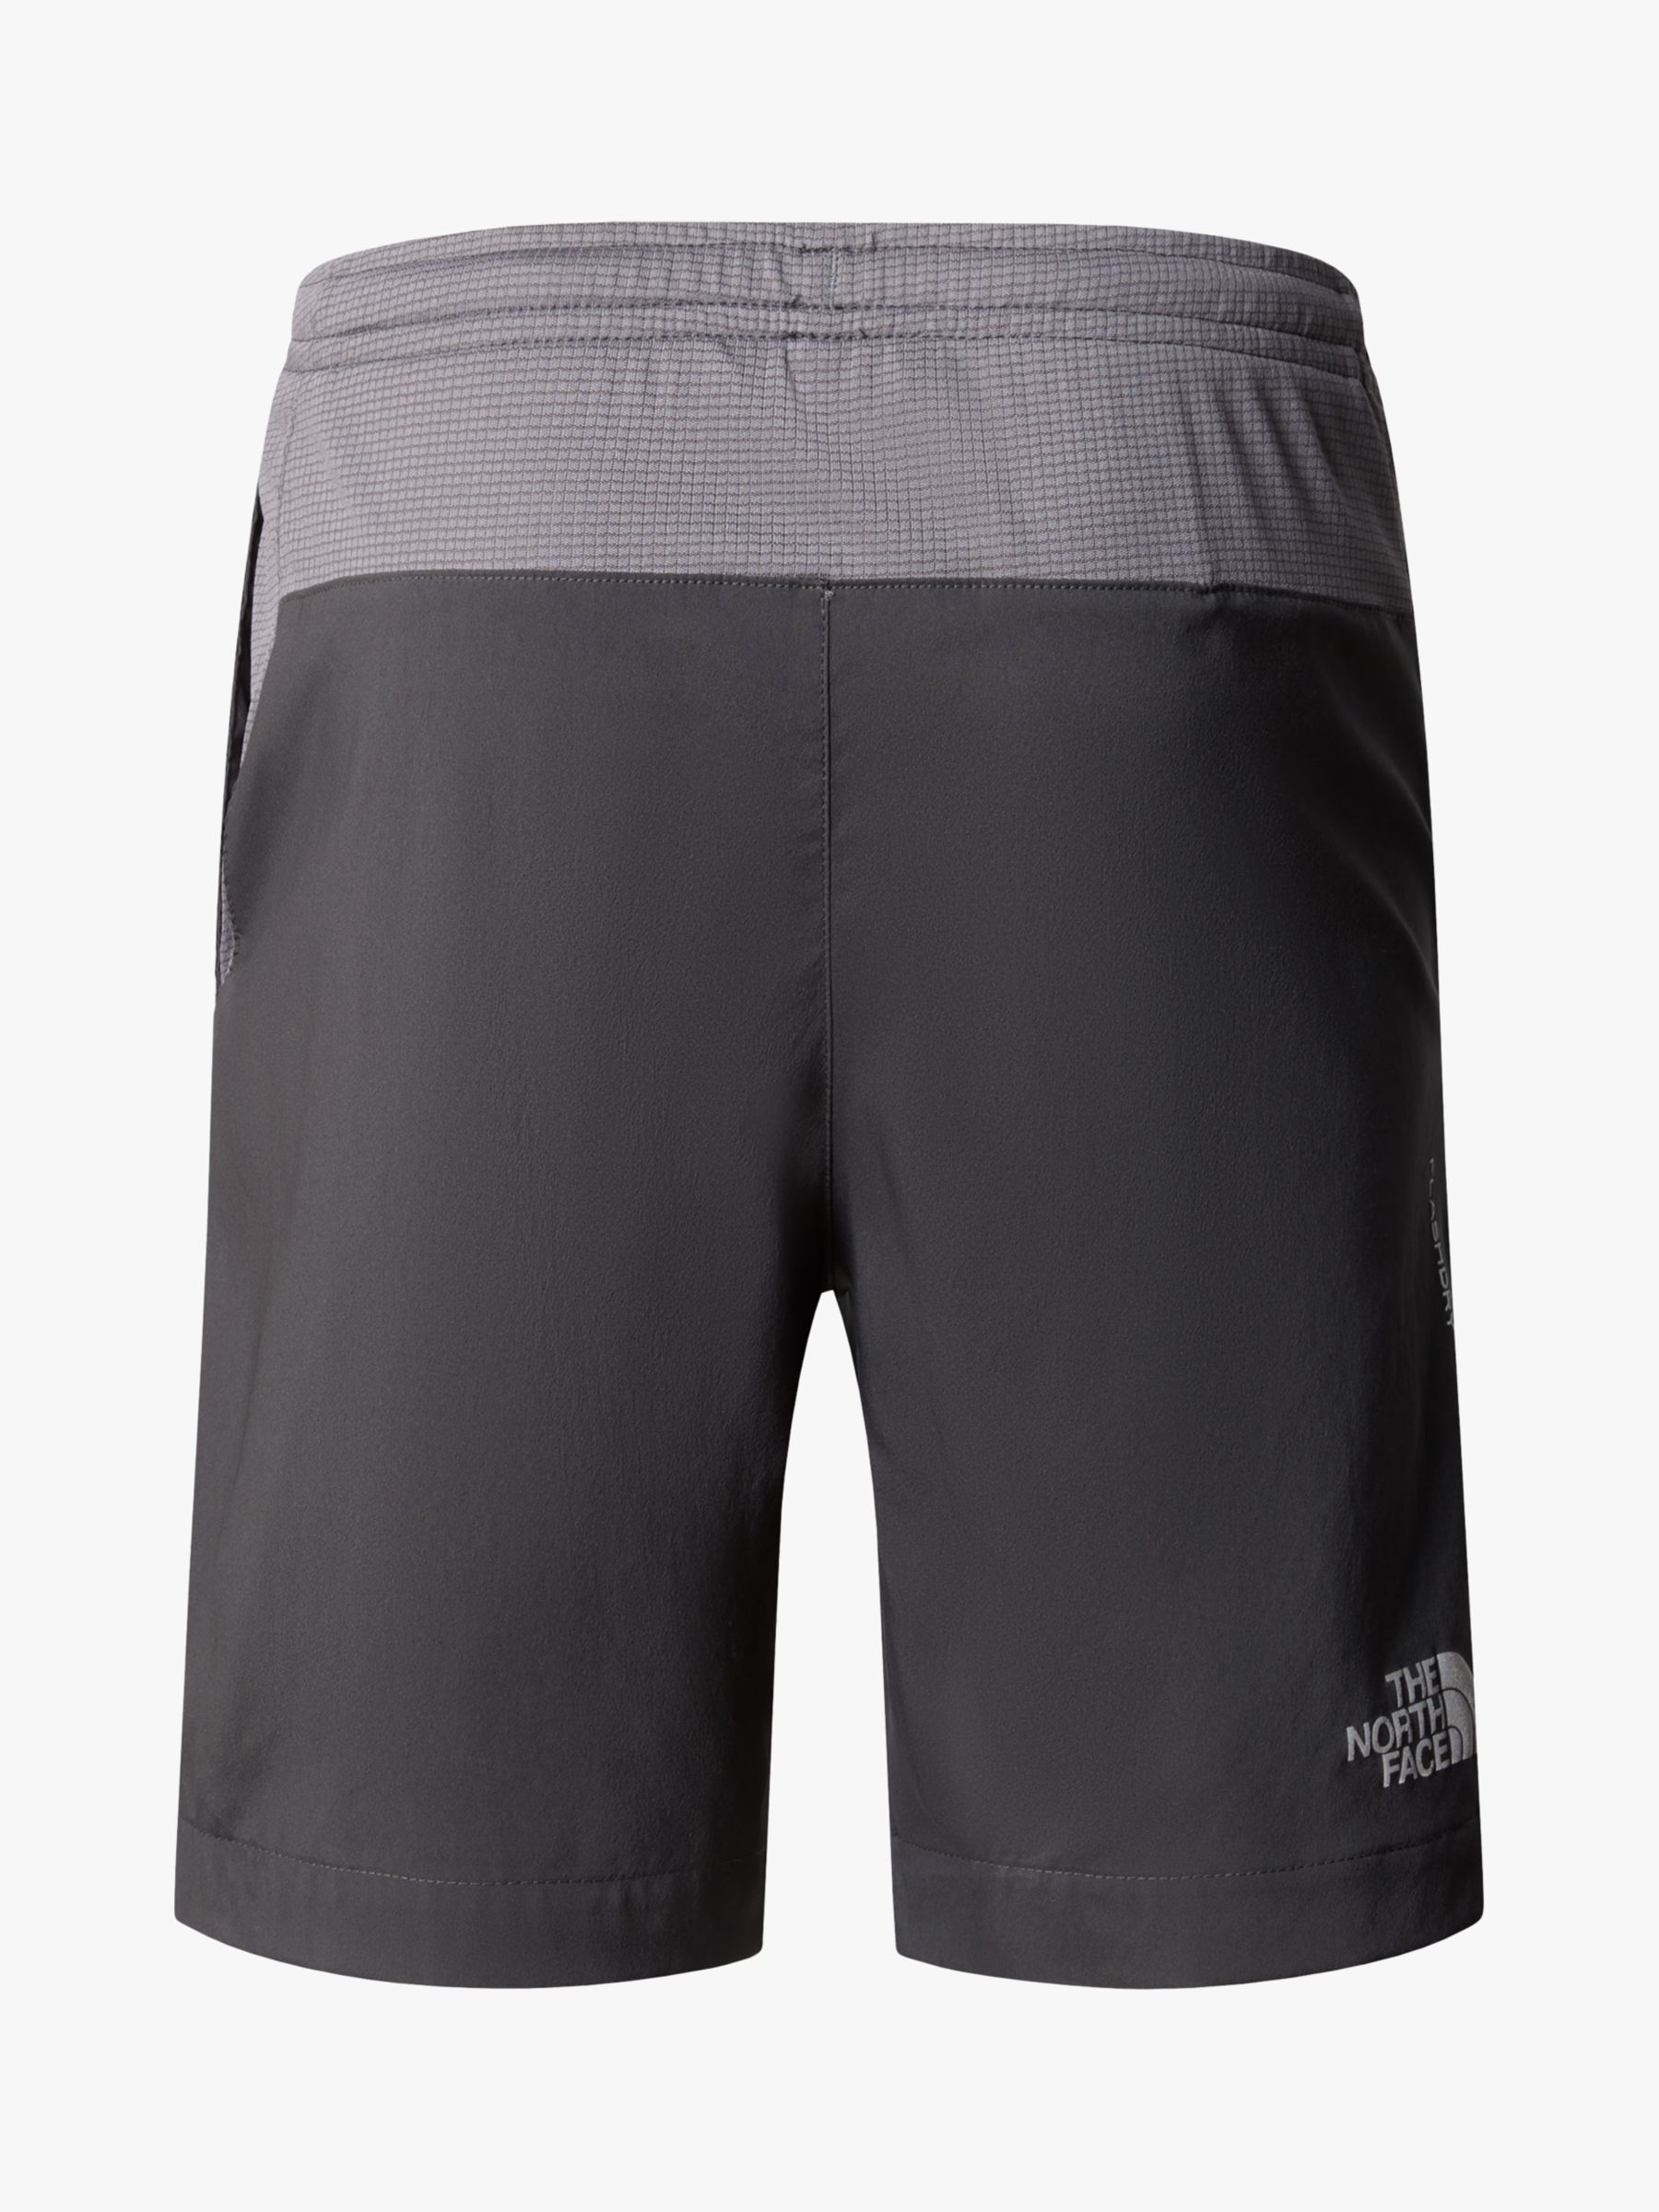 The North Face Kids' Reactor Drawstring Shorts, Asphalt Grey, XL